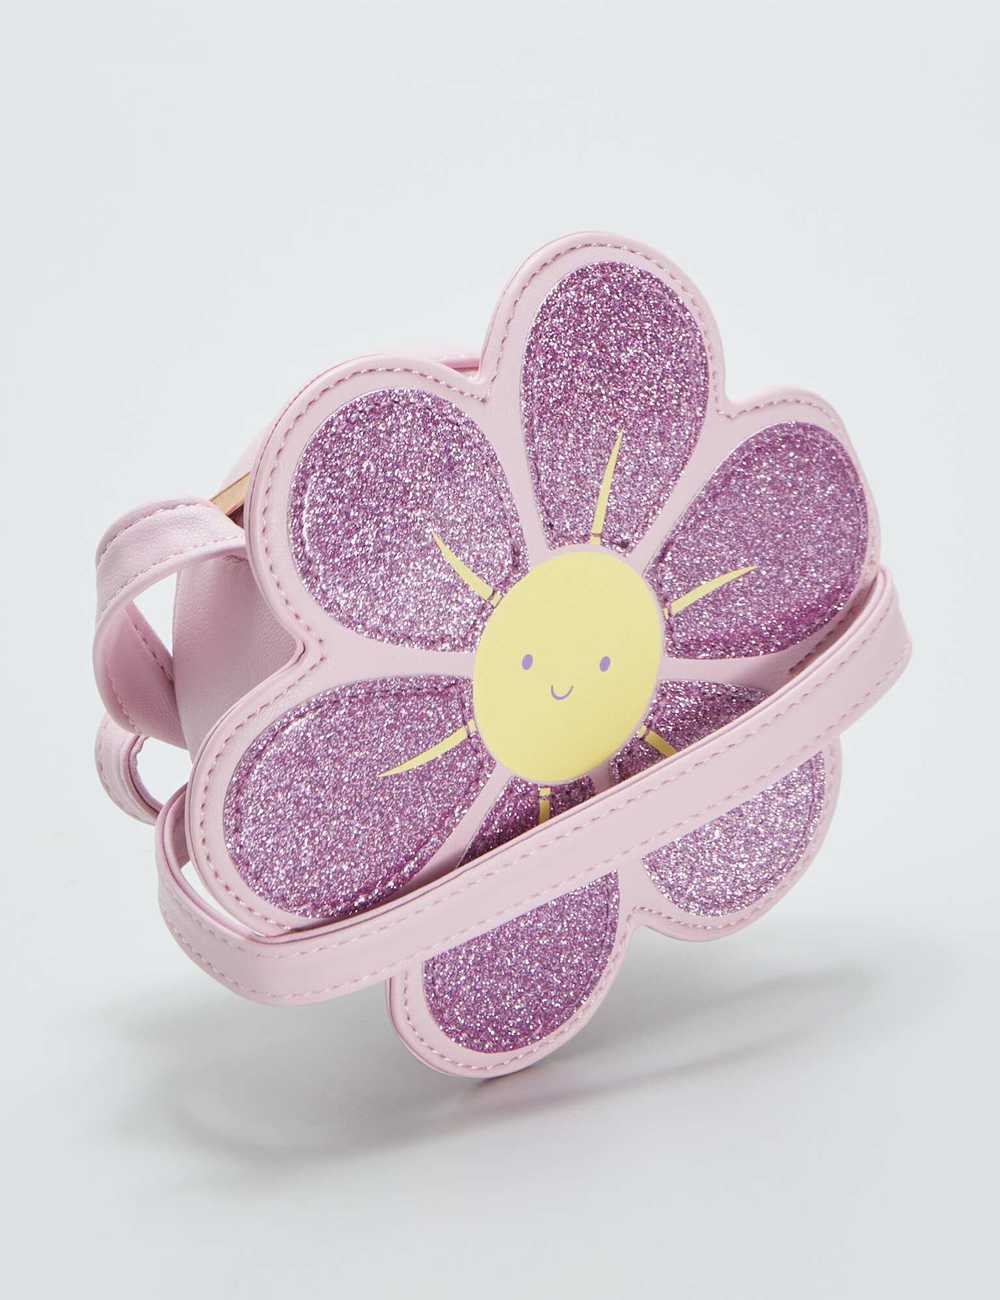 Flower crochet shoulder/hand bag #CCFB-02 Crochet pattern by Ting Fan |  Выкройки, Вязанная крючком сумка, Вязание